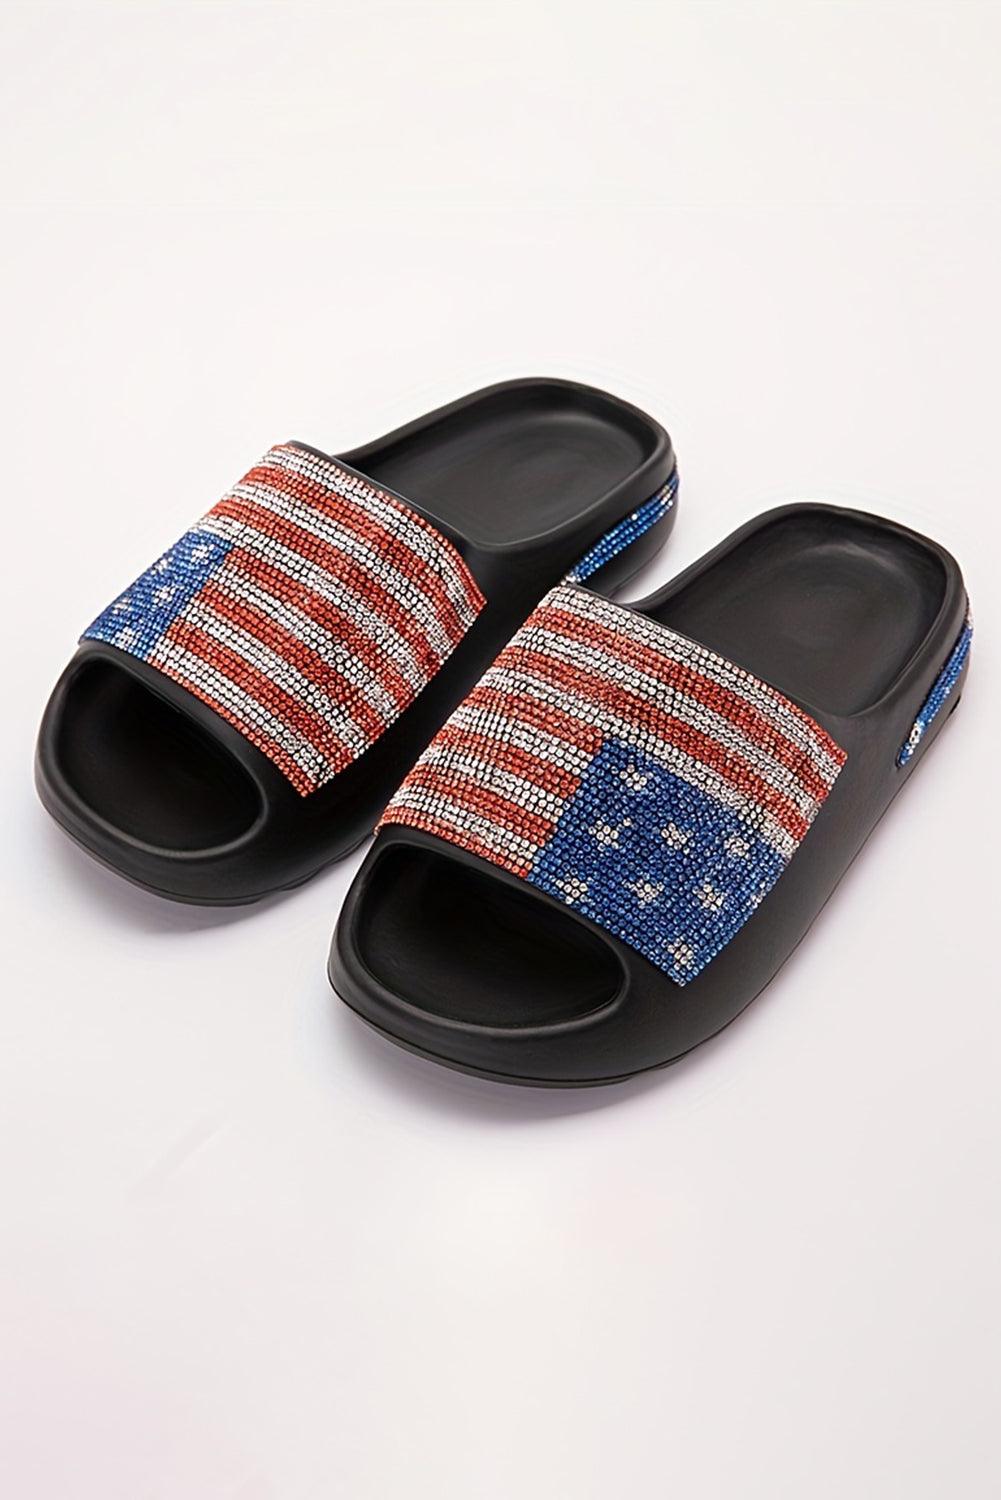 Black Rhinestone American Flag Thick Sole Slippers - L & M Kee, LLC